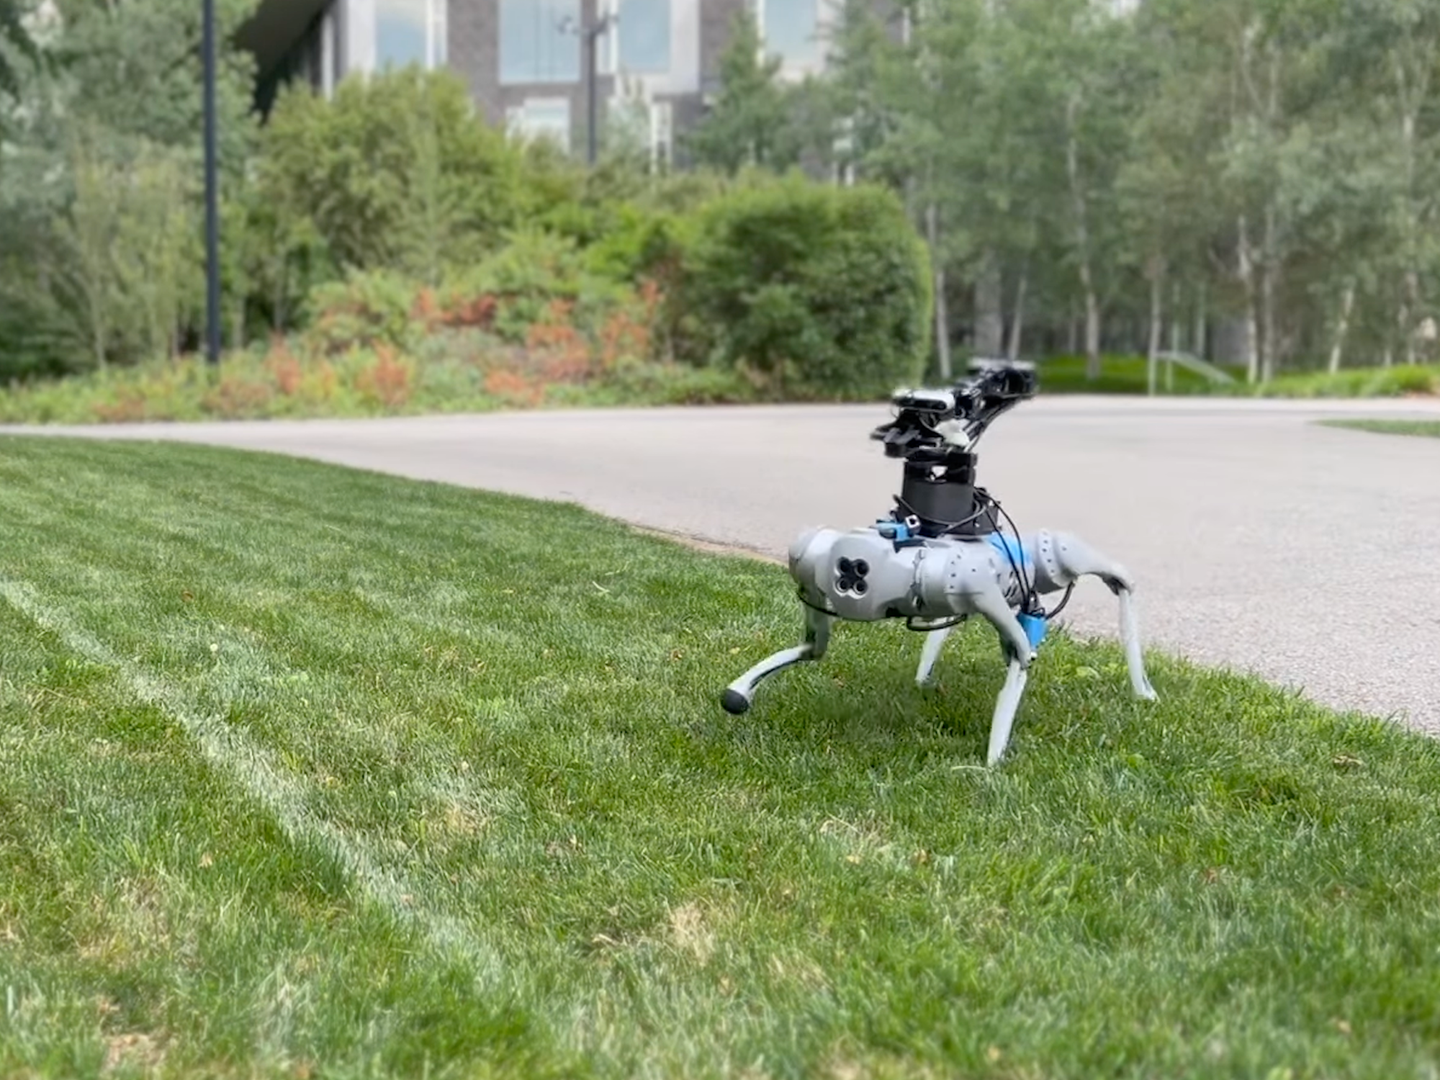 Quadrupedal robot with arm attachment walking across grass